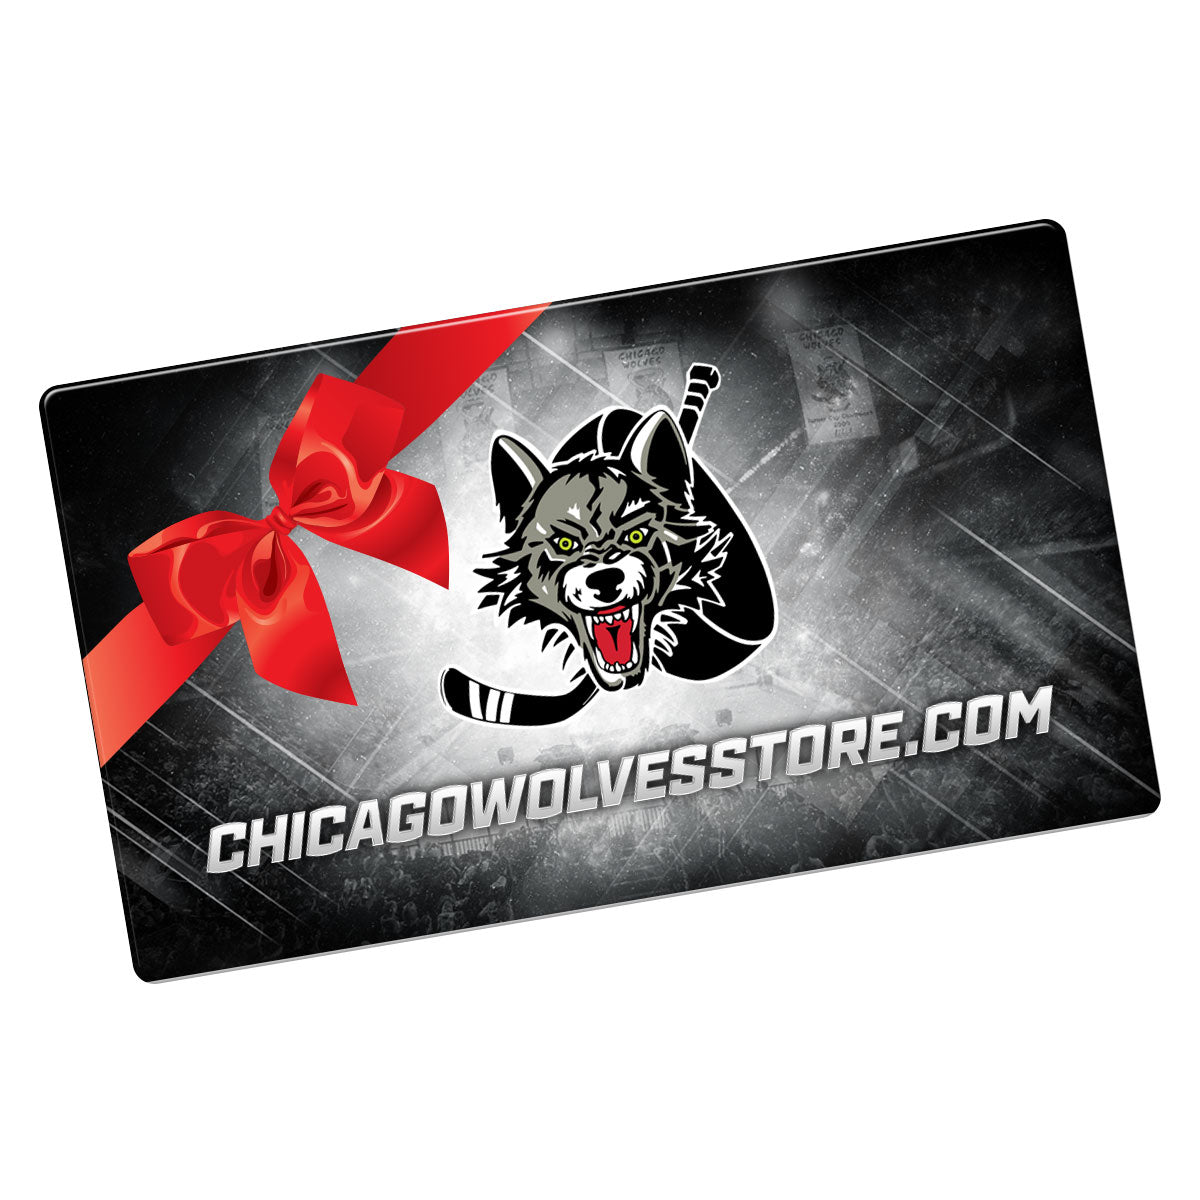 Chicago Bears Game Ticket Gift Voucher